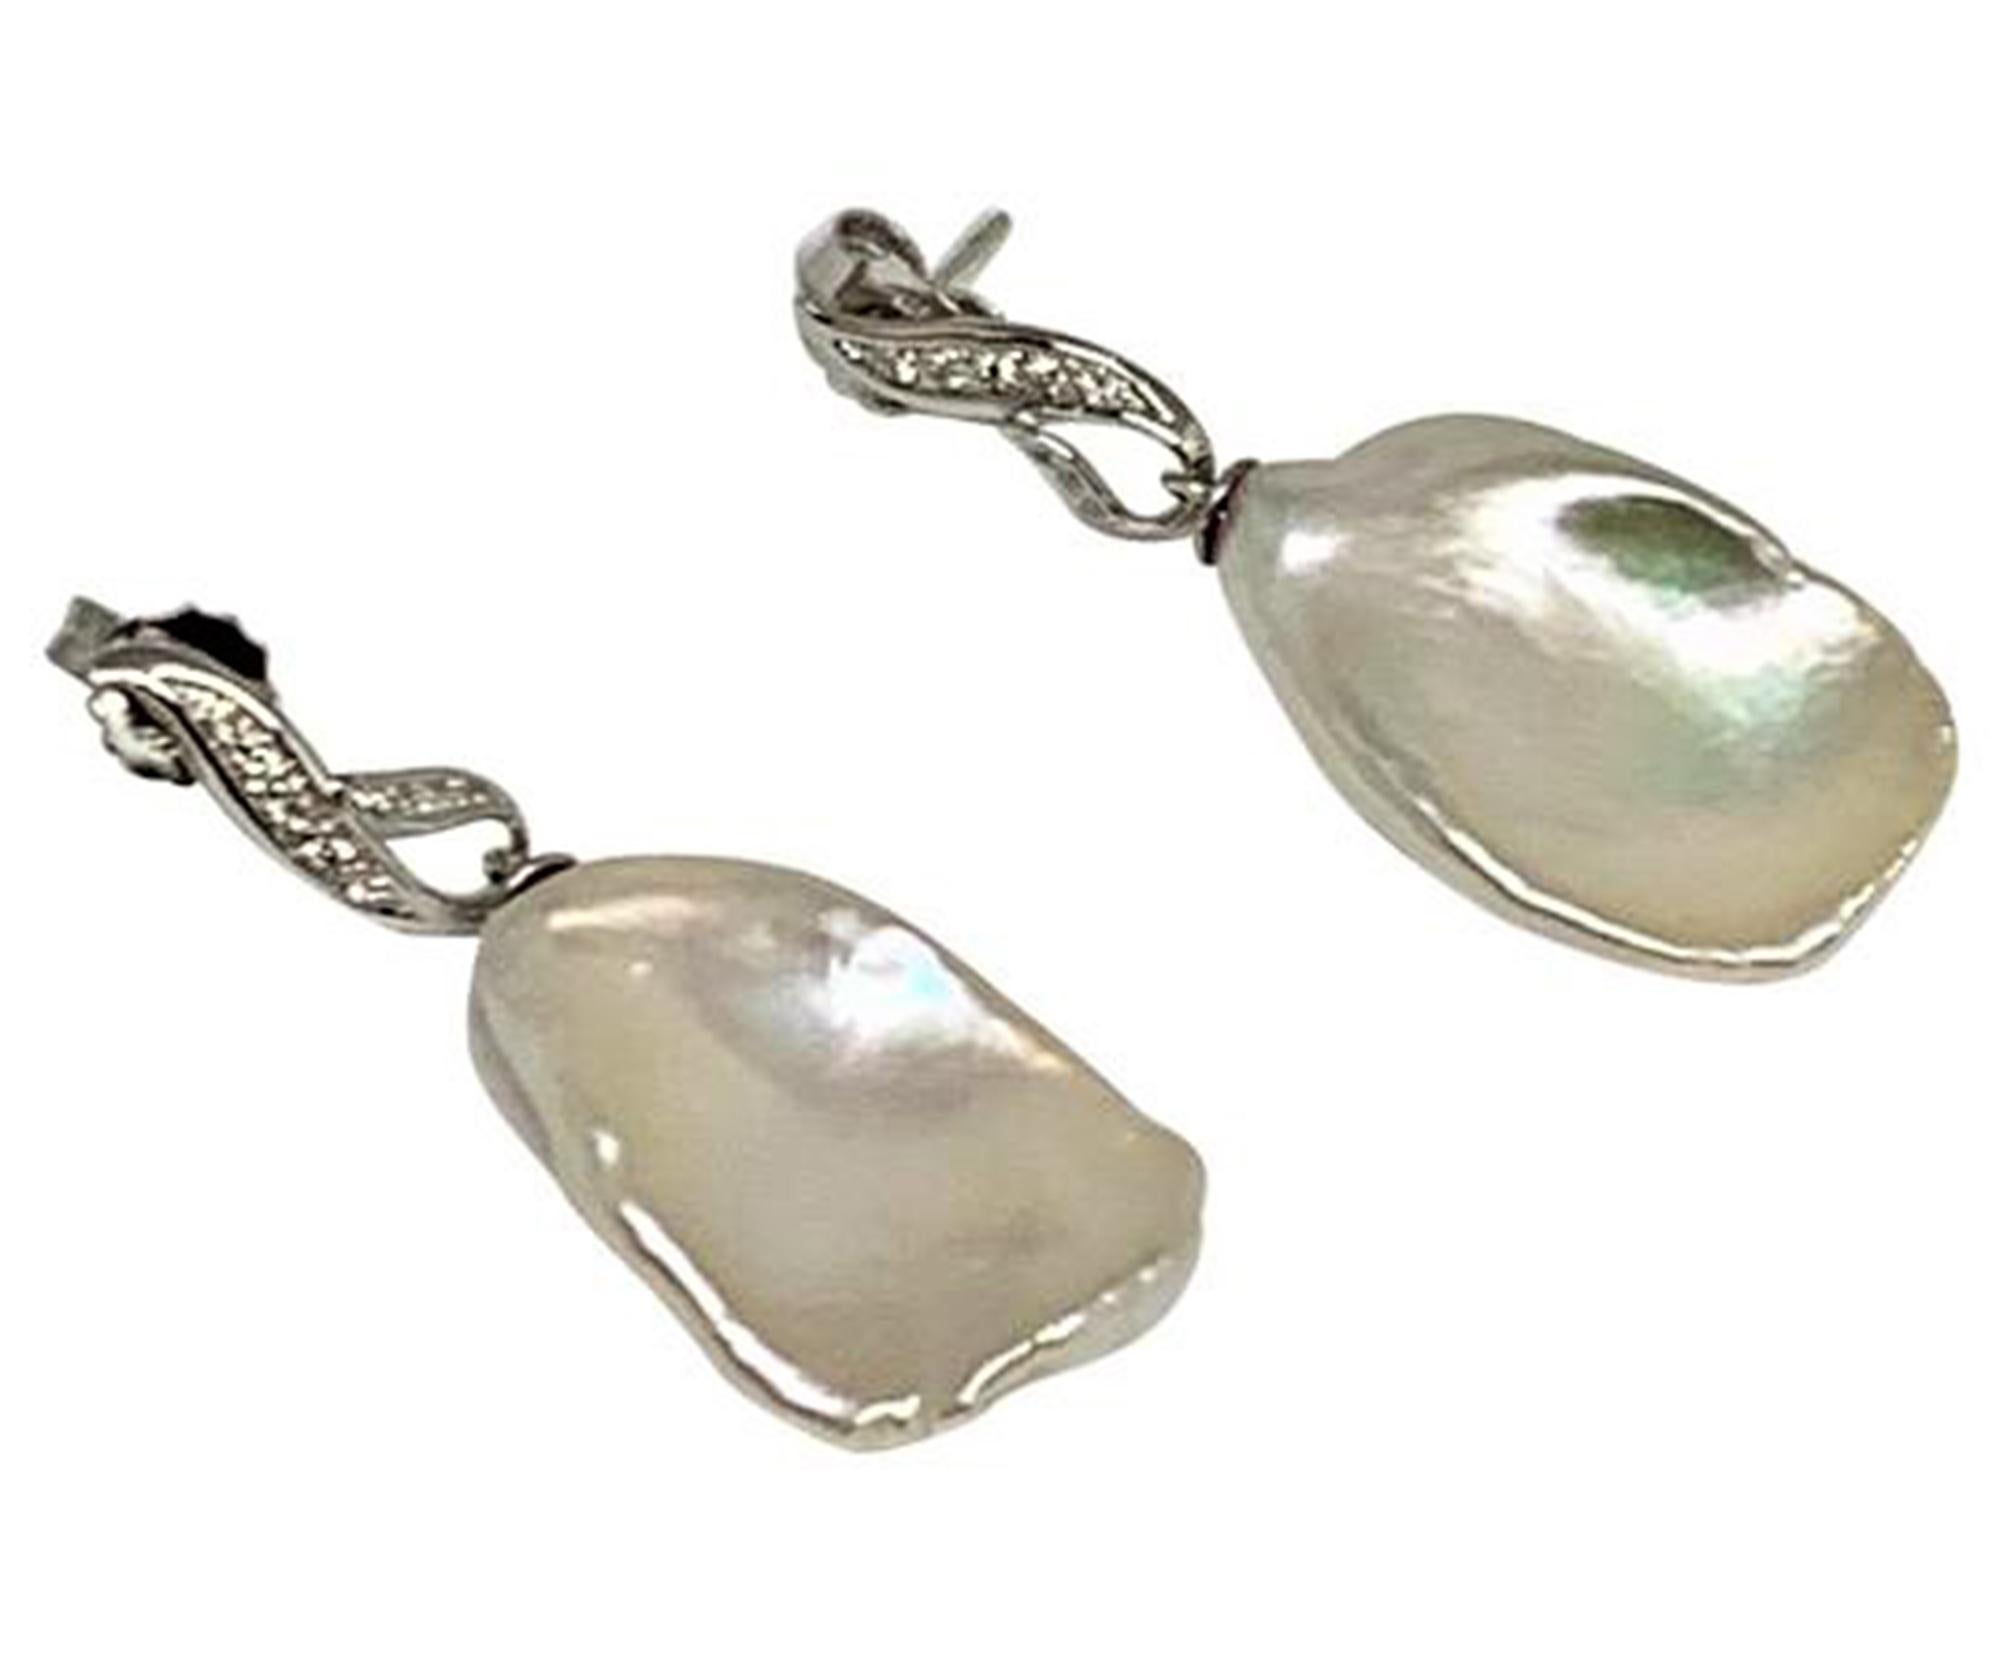 large dangling pearl earrings